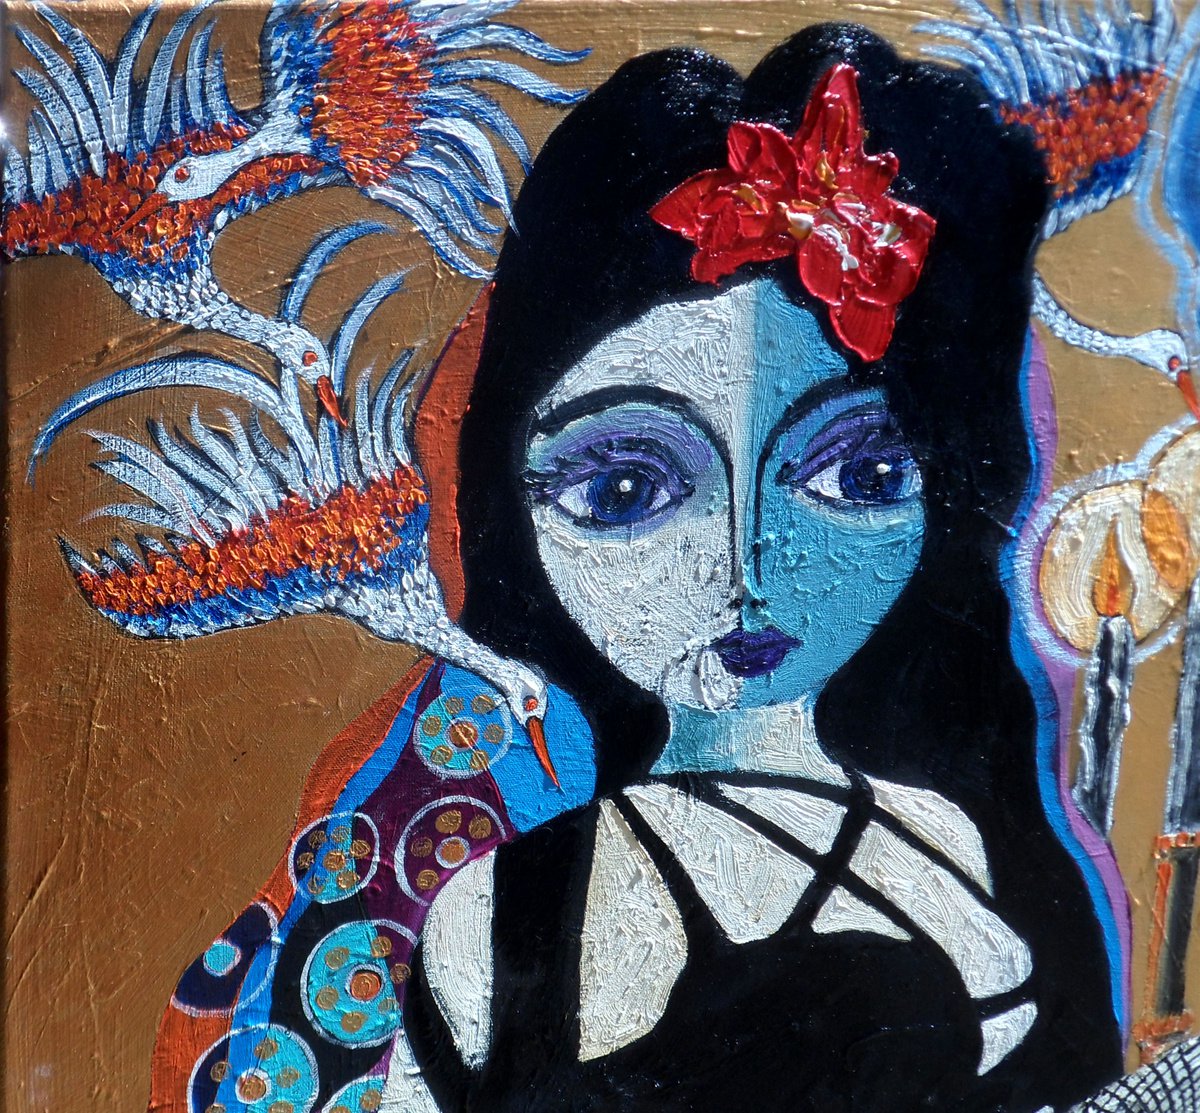 The Gothic Geisha Girl by Leonard Dobson